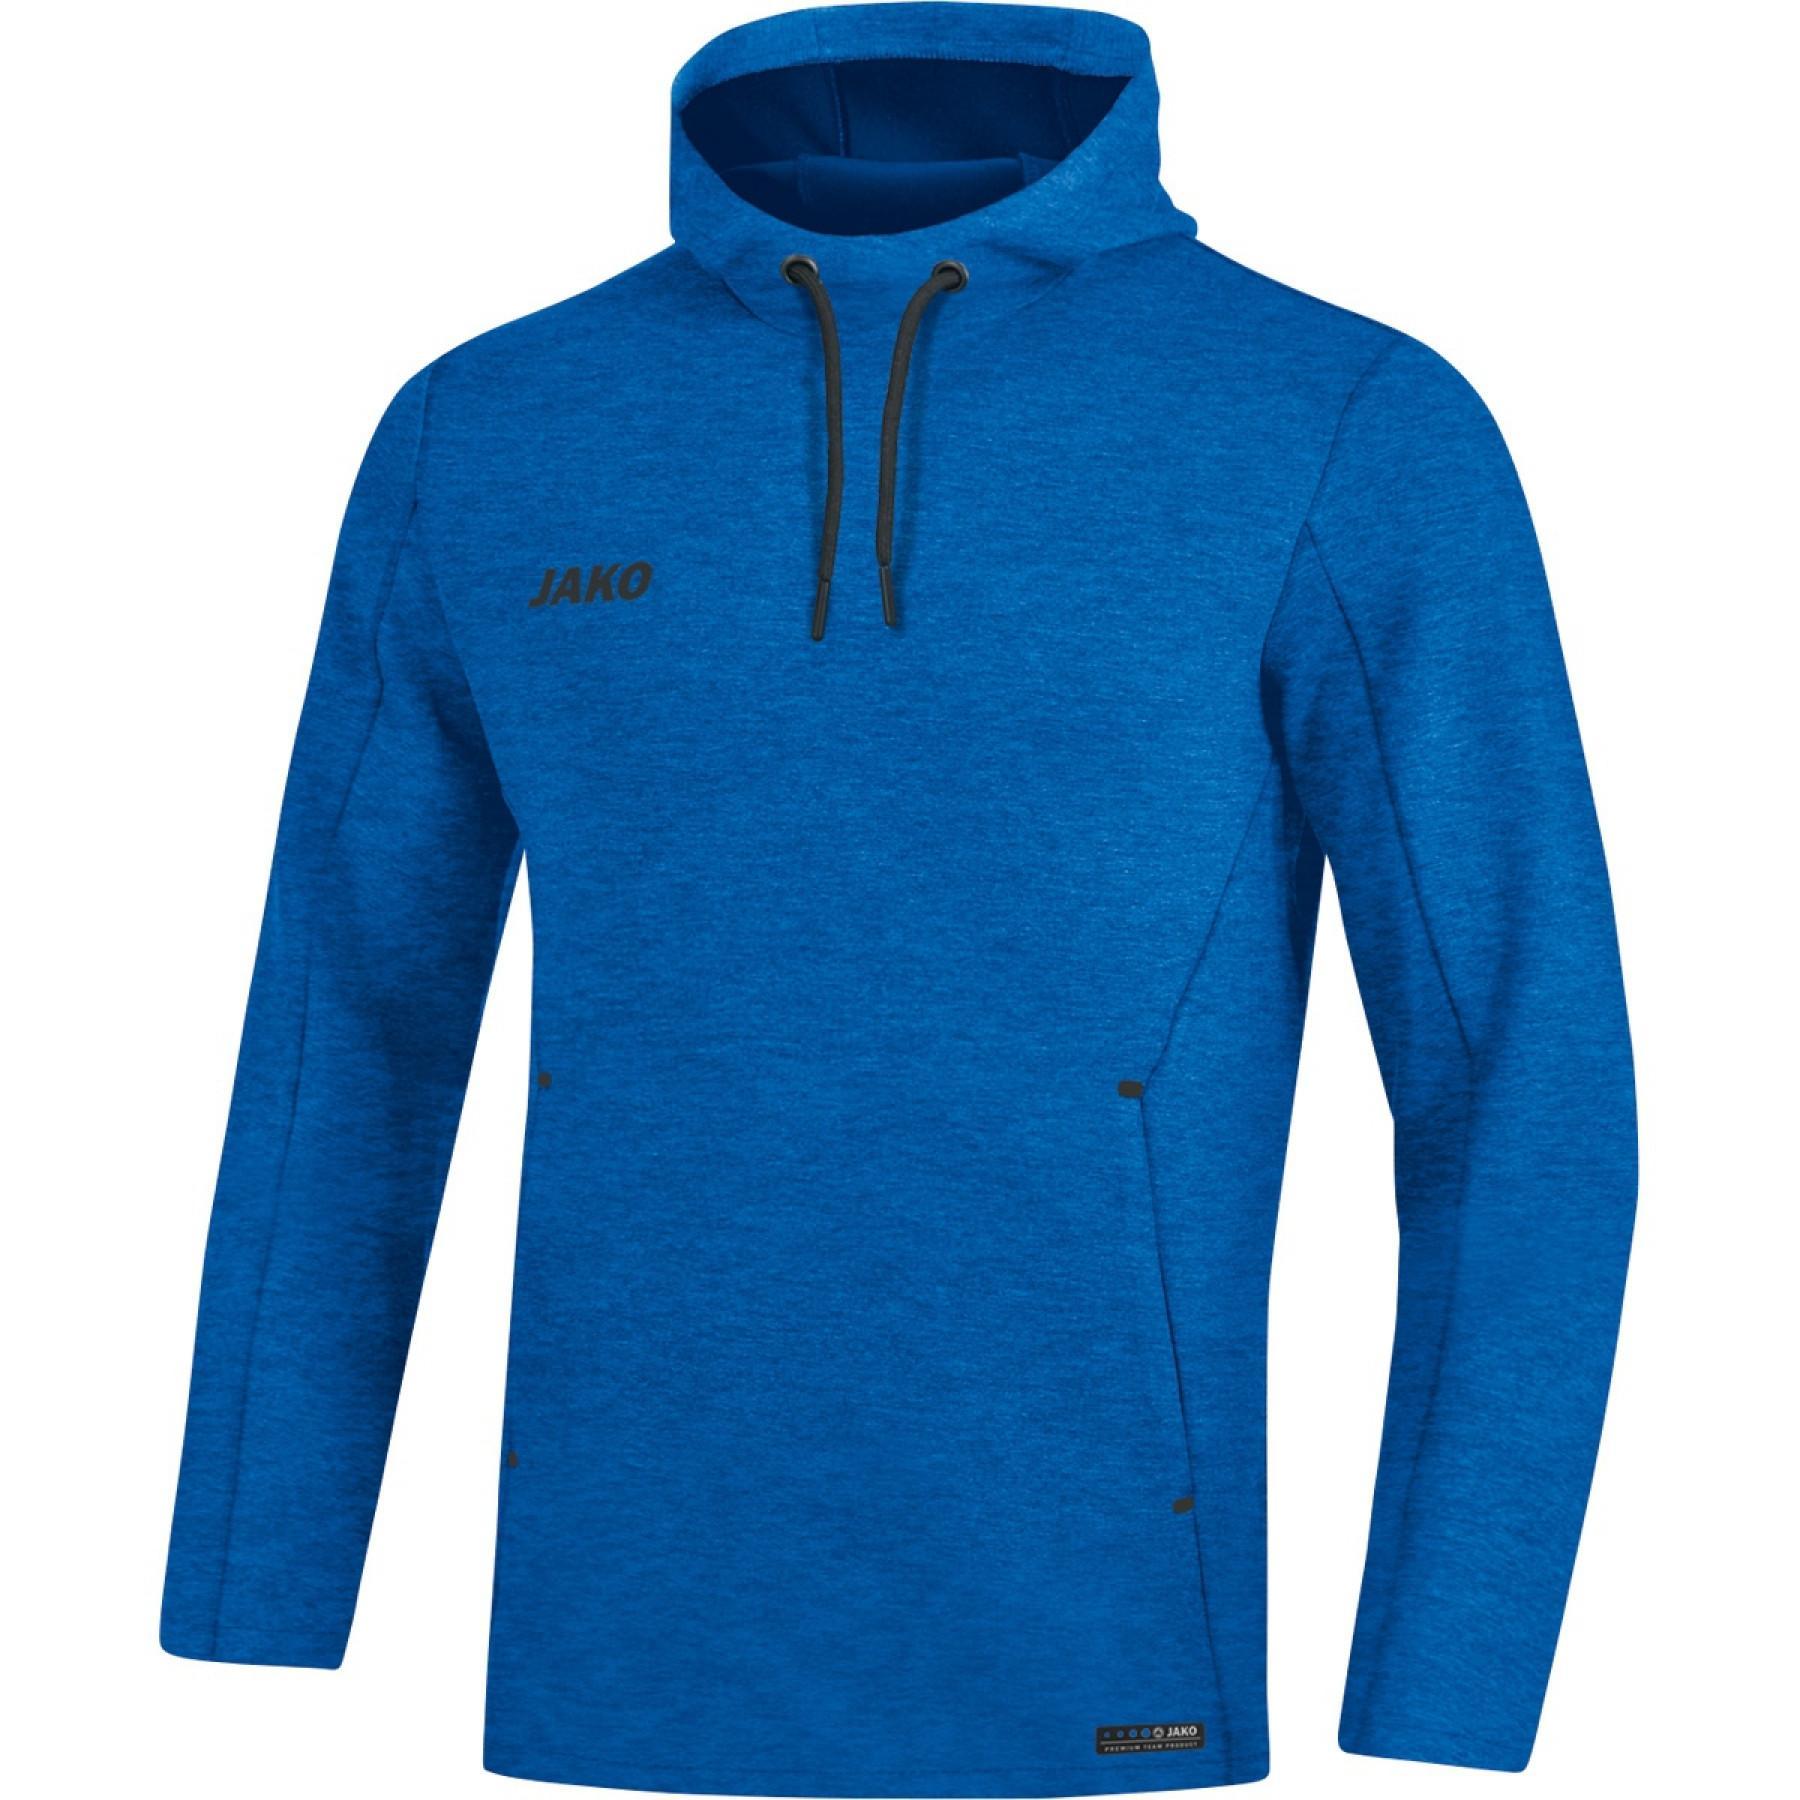 Hoodie Jako Premium Basics - Sweatshirts - Men's wear - Handball wear